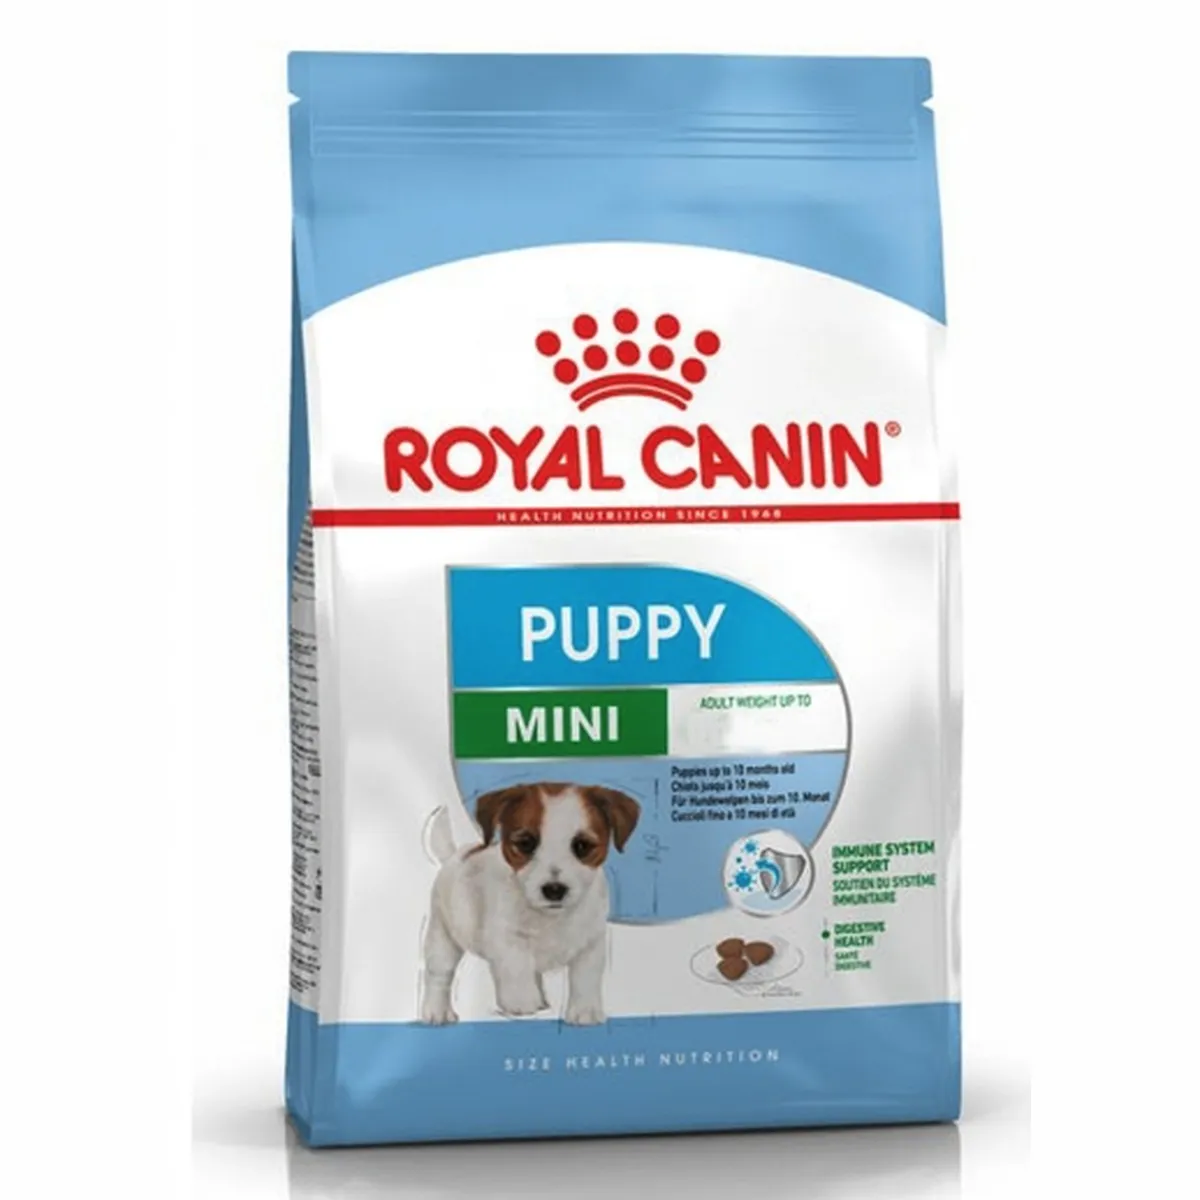 Royal Canin Puppy Mini - 800 g